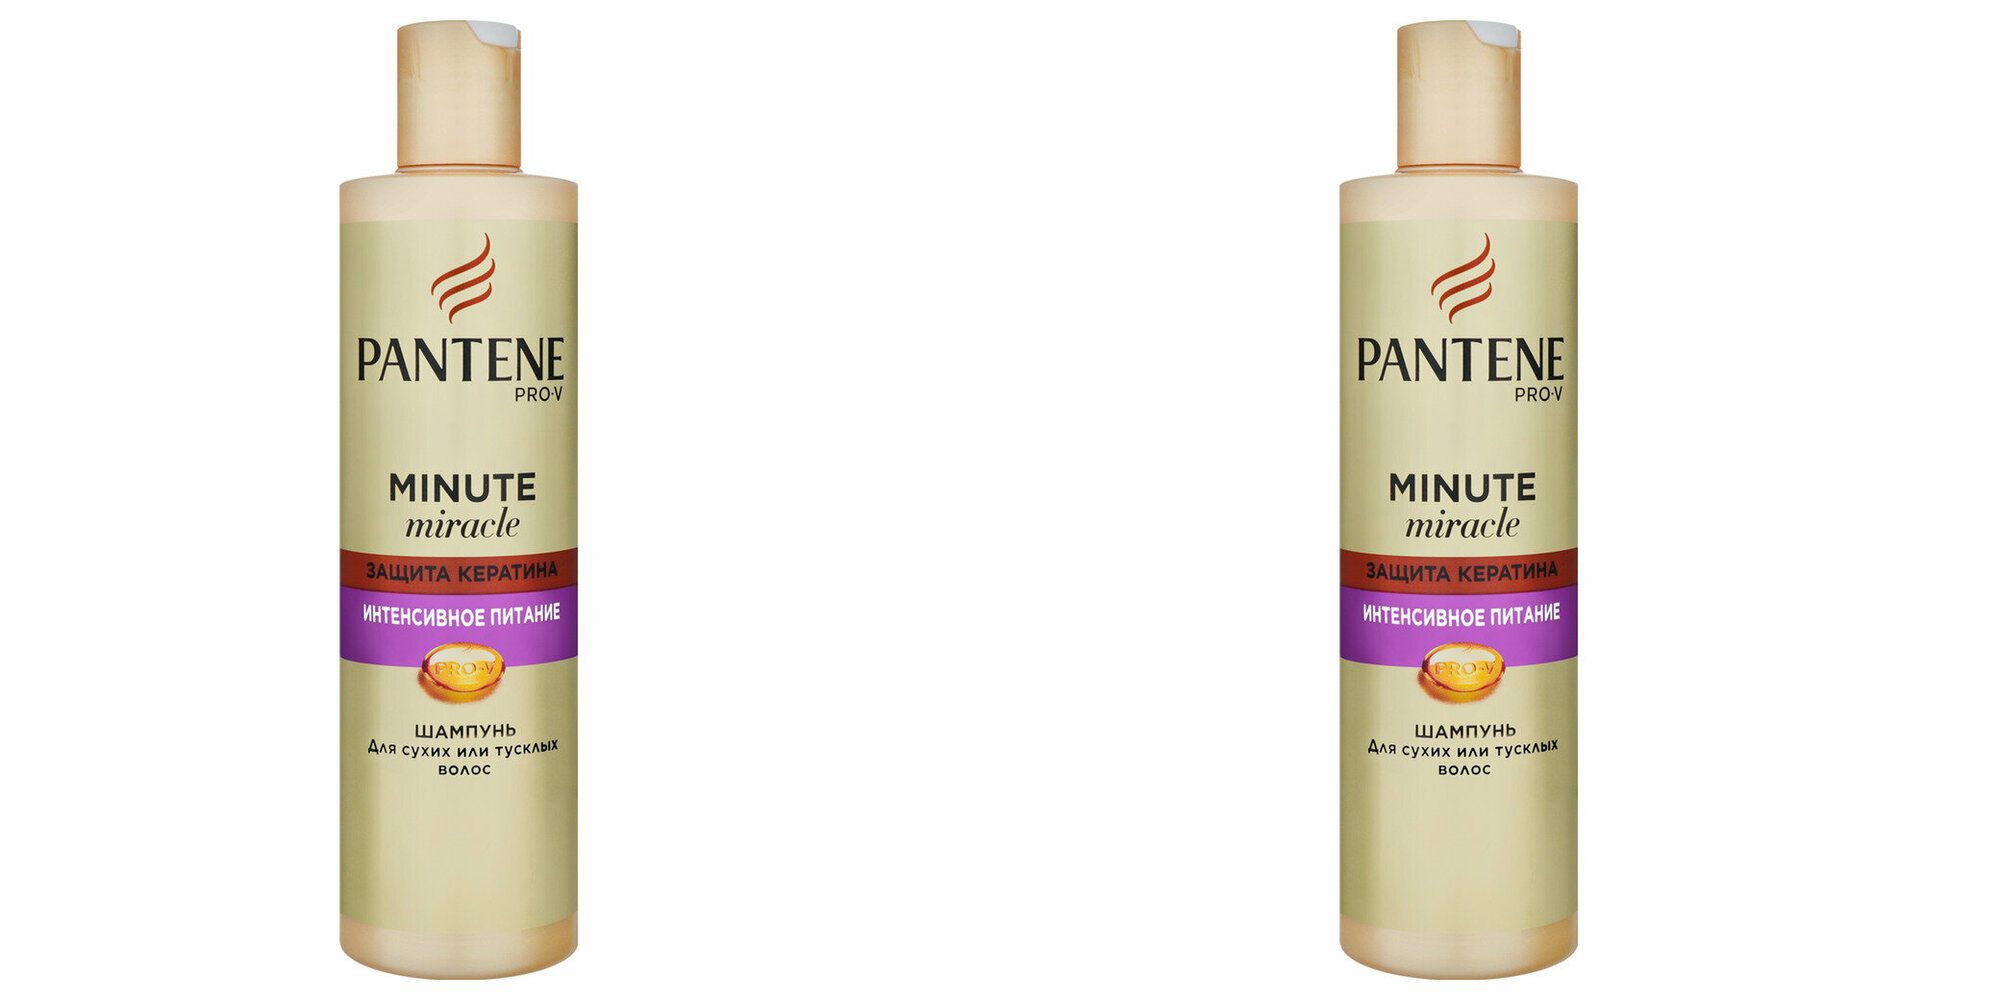 Pantene Pro-V Шампунь для волос Minute Miracle Интенсивное питание 270мл 2 шт